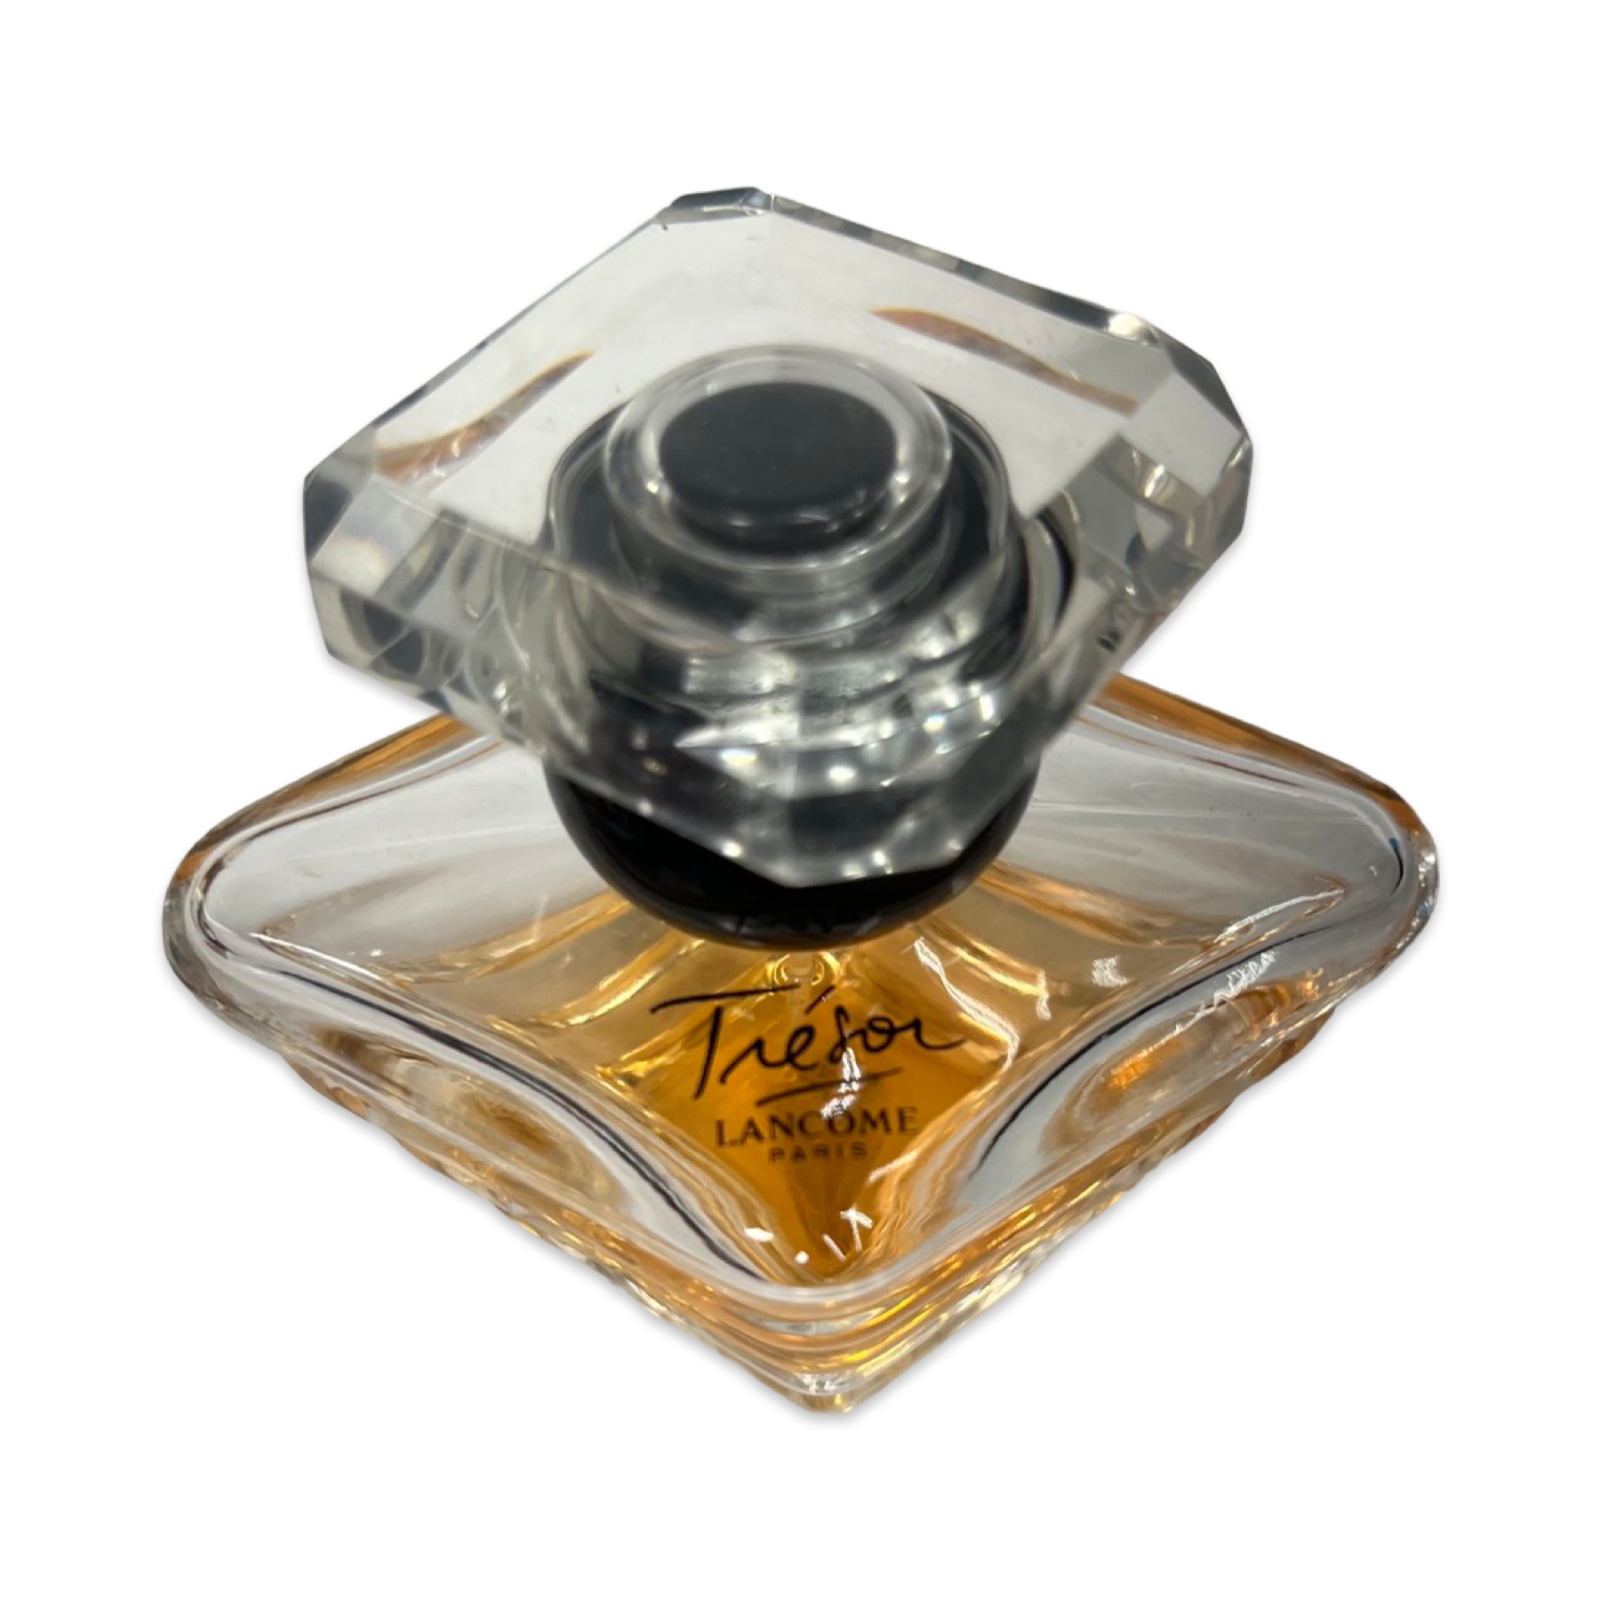 Tresor Lancome Paris 1 fl oz eau de Parfum Perfume Spray Women Fragrance